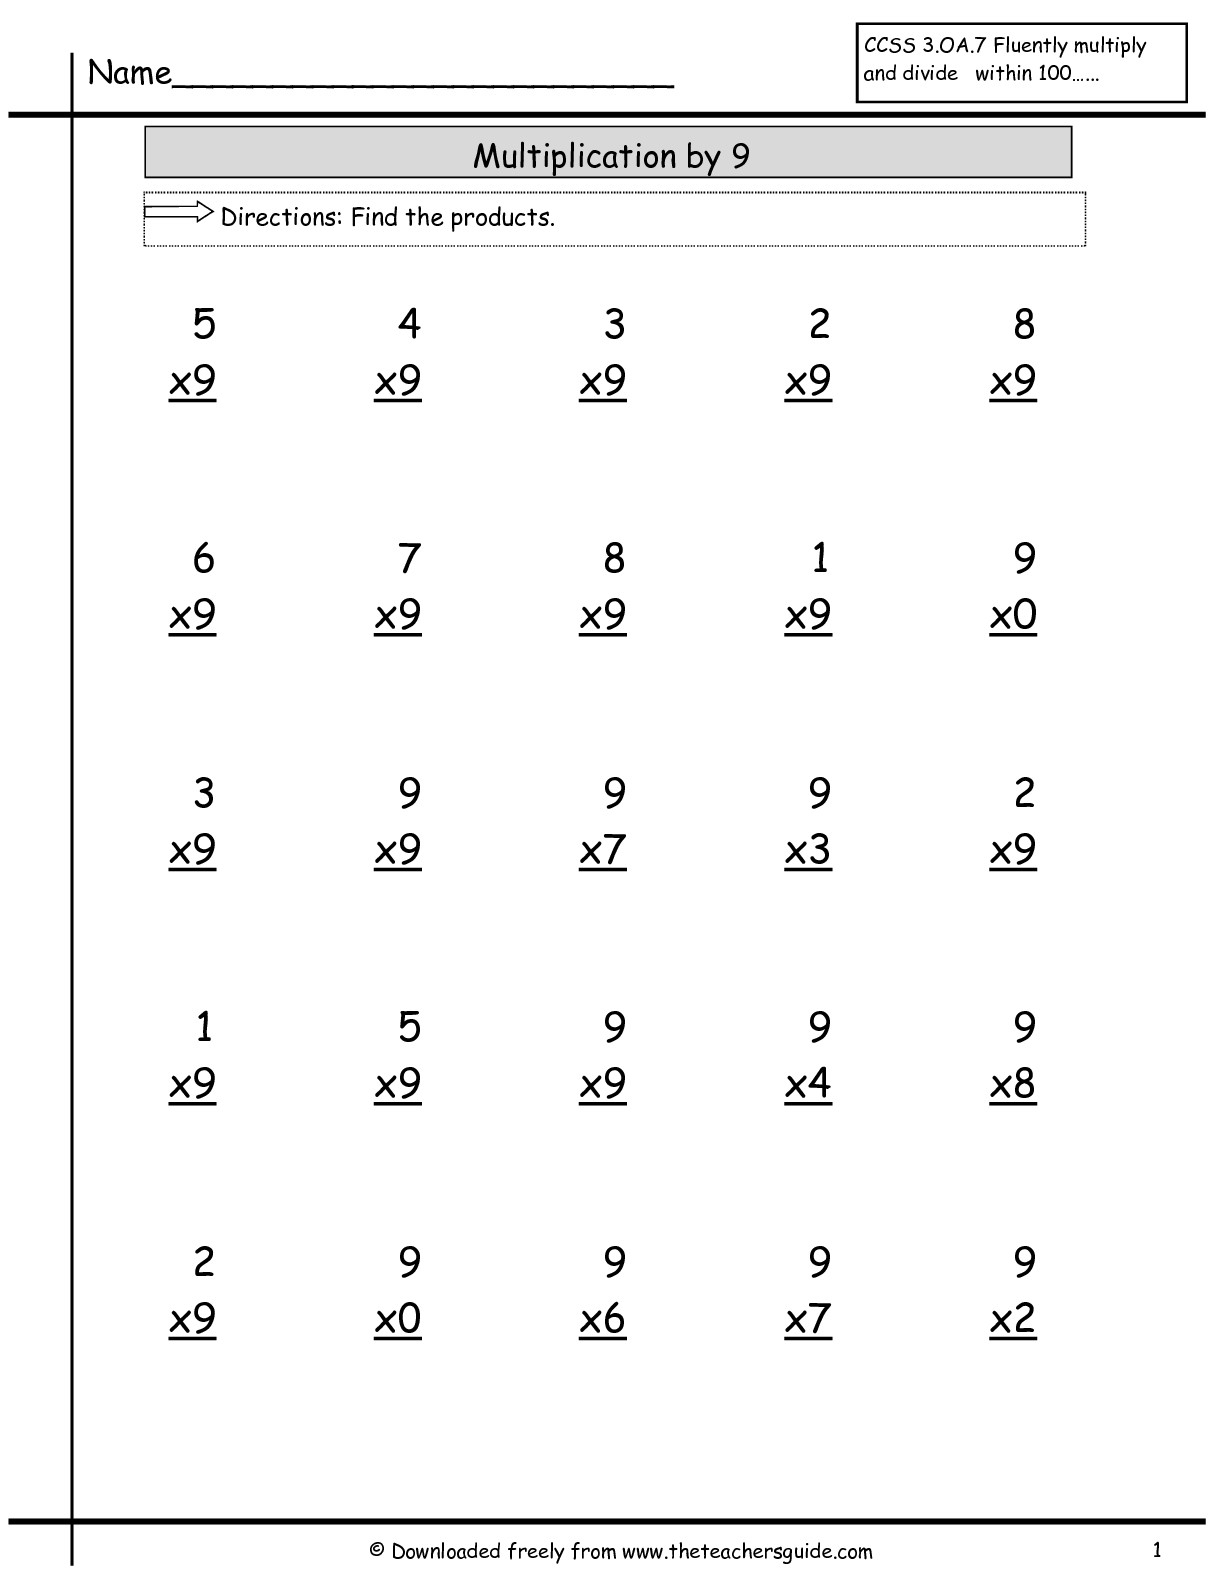 Multiplication Worksheets 7 Facts Printable Multiplication Flash Cards